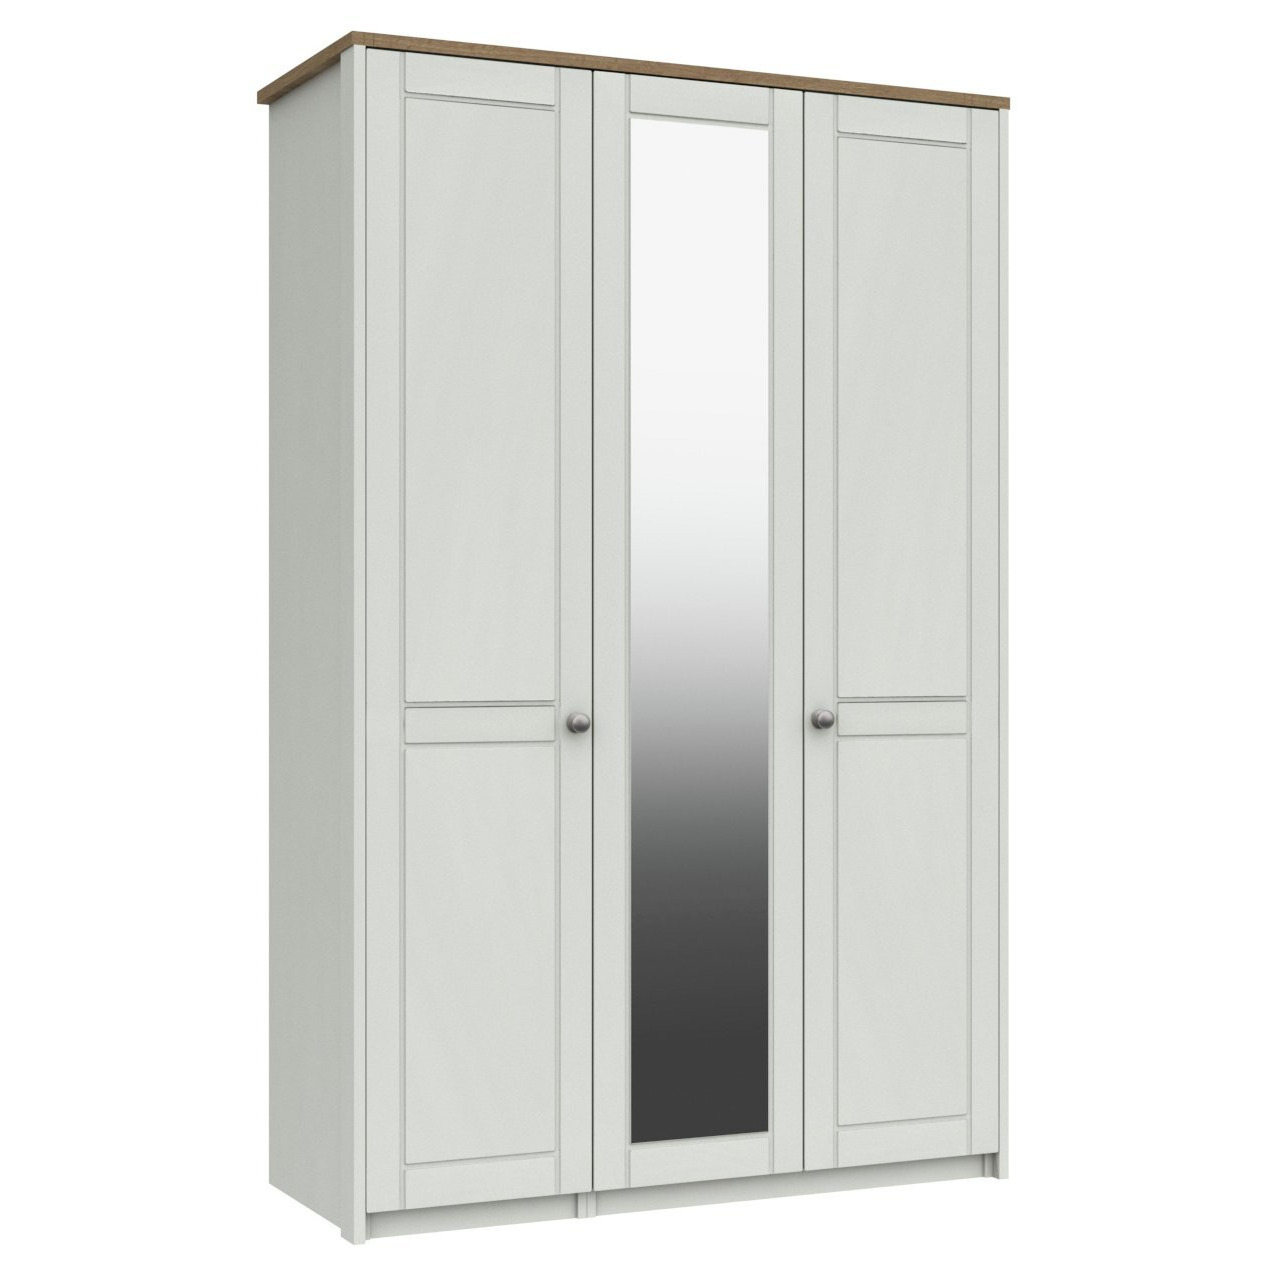 Kielder 3 Door Mirror Wardrobe - White - image 1